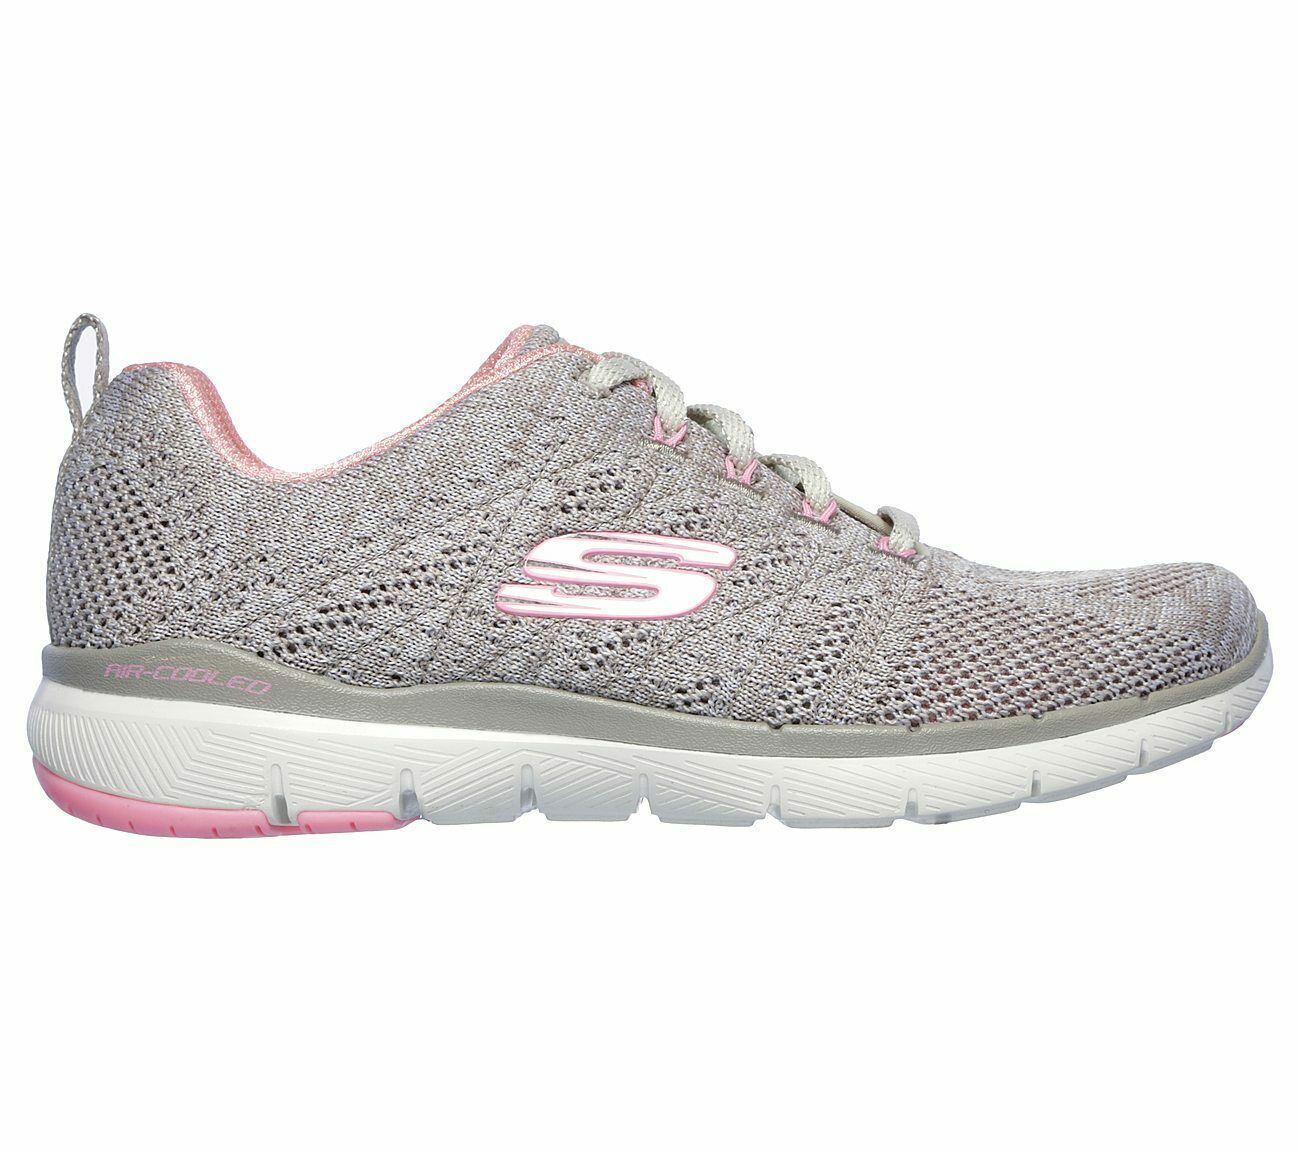 Skechers Shoes Natural Pink Memory Foam Women Sport Comfort Sneaker Casual 13077 - Athletic